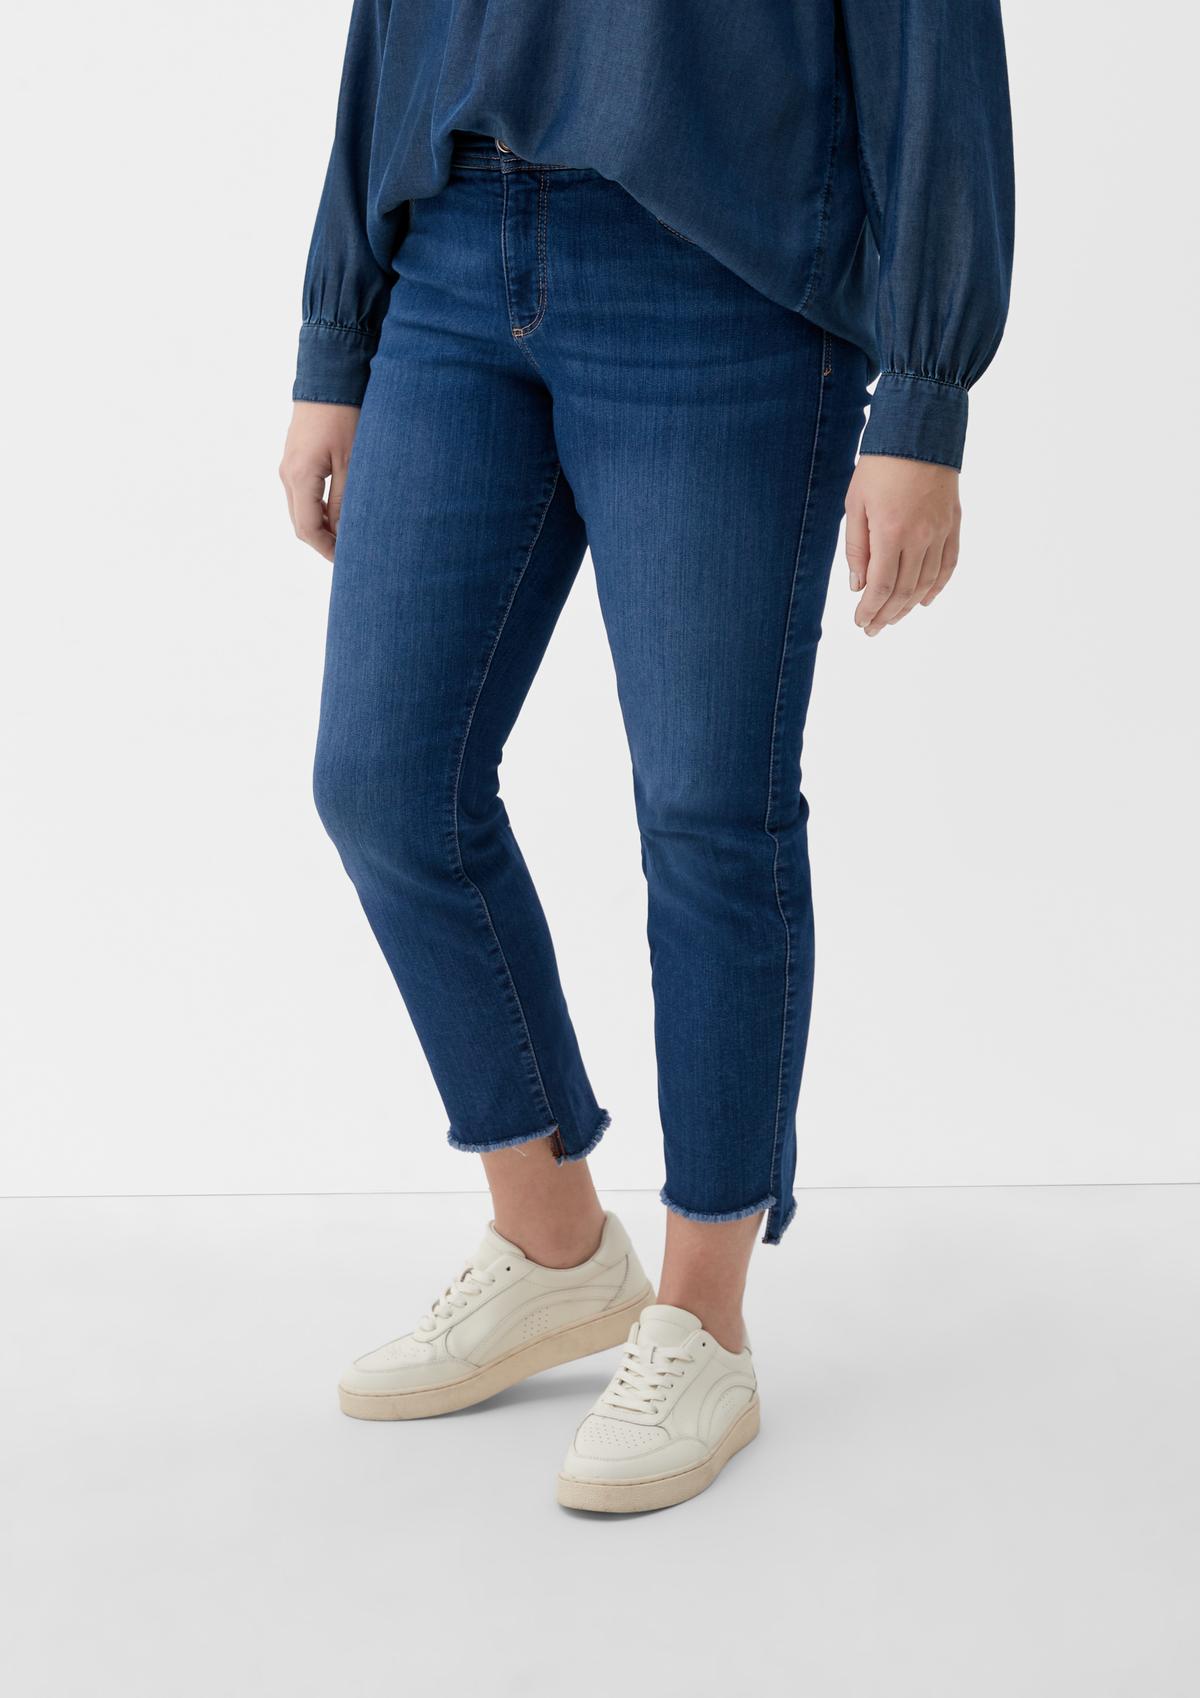 Jeans / Slim Fit / Mid Rise / Slim Leg